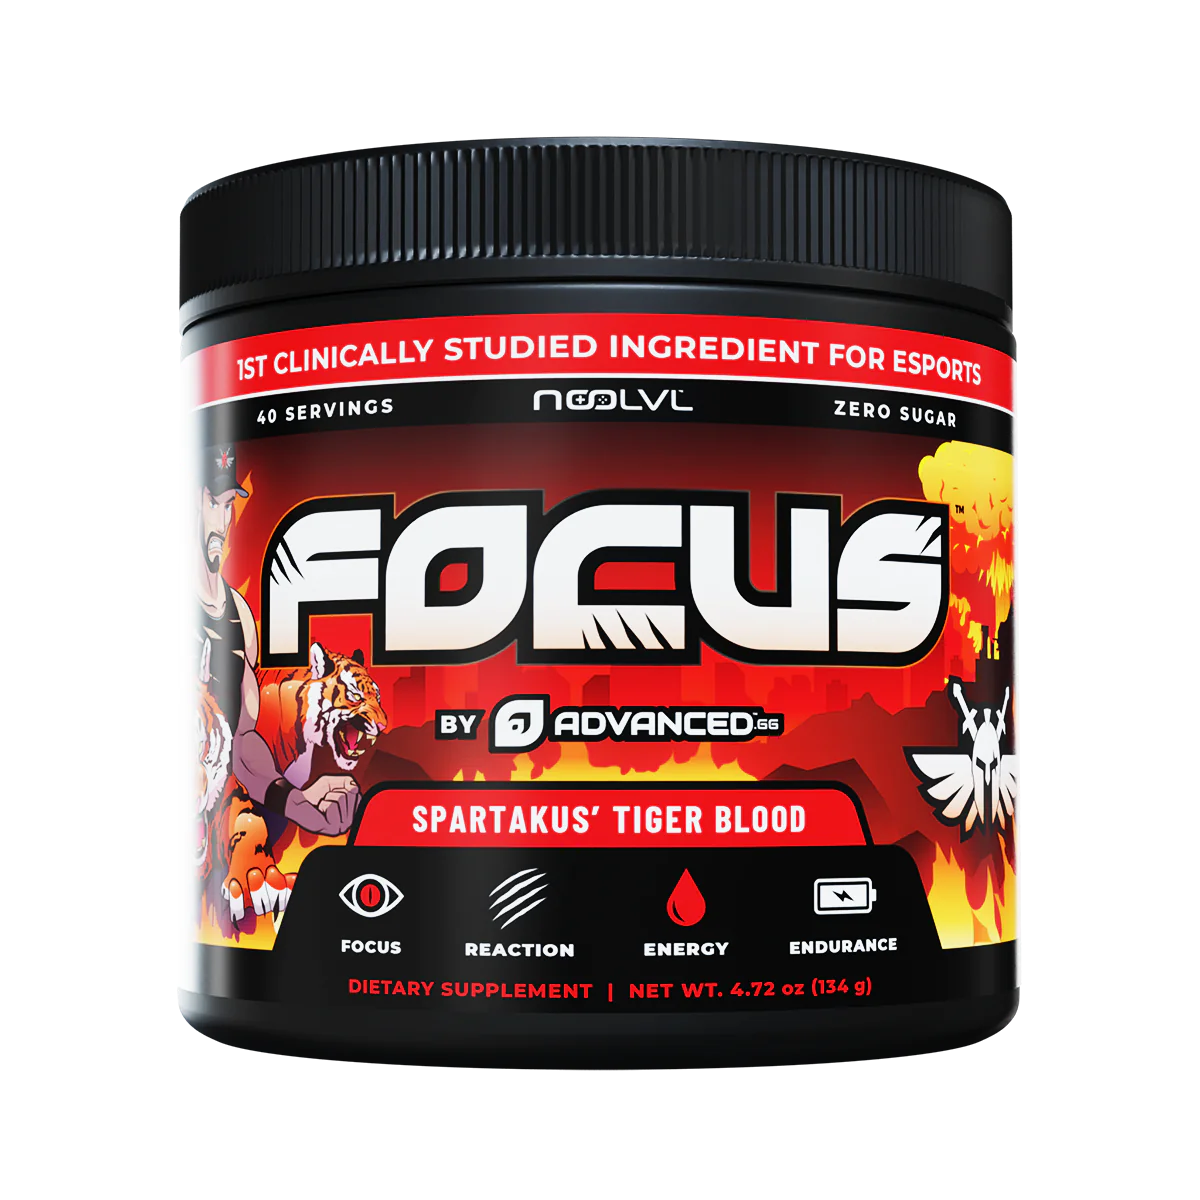 Focus 2.0 | Spartakus' Tiger Blood